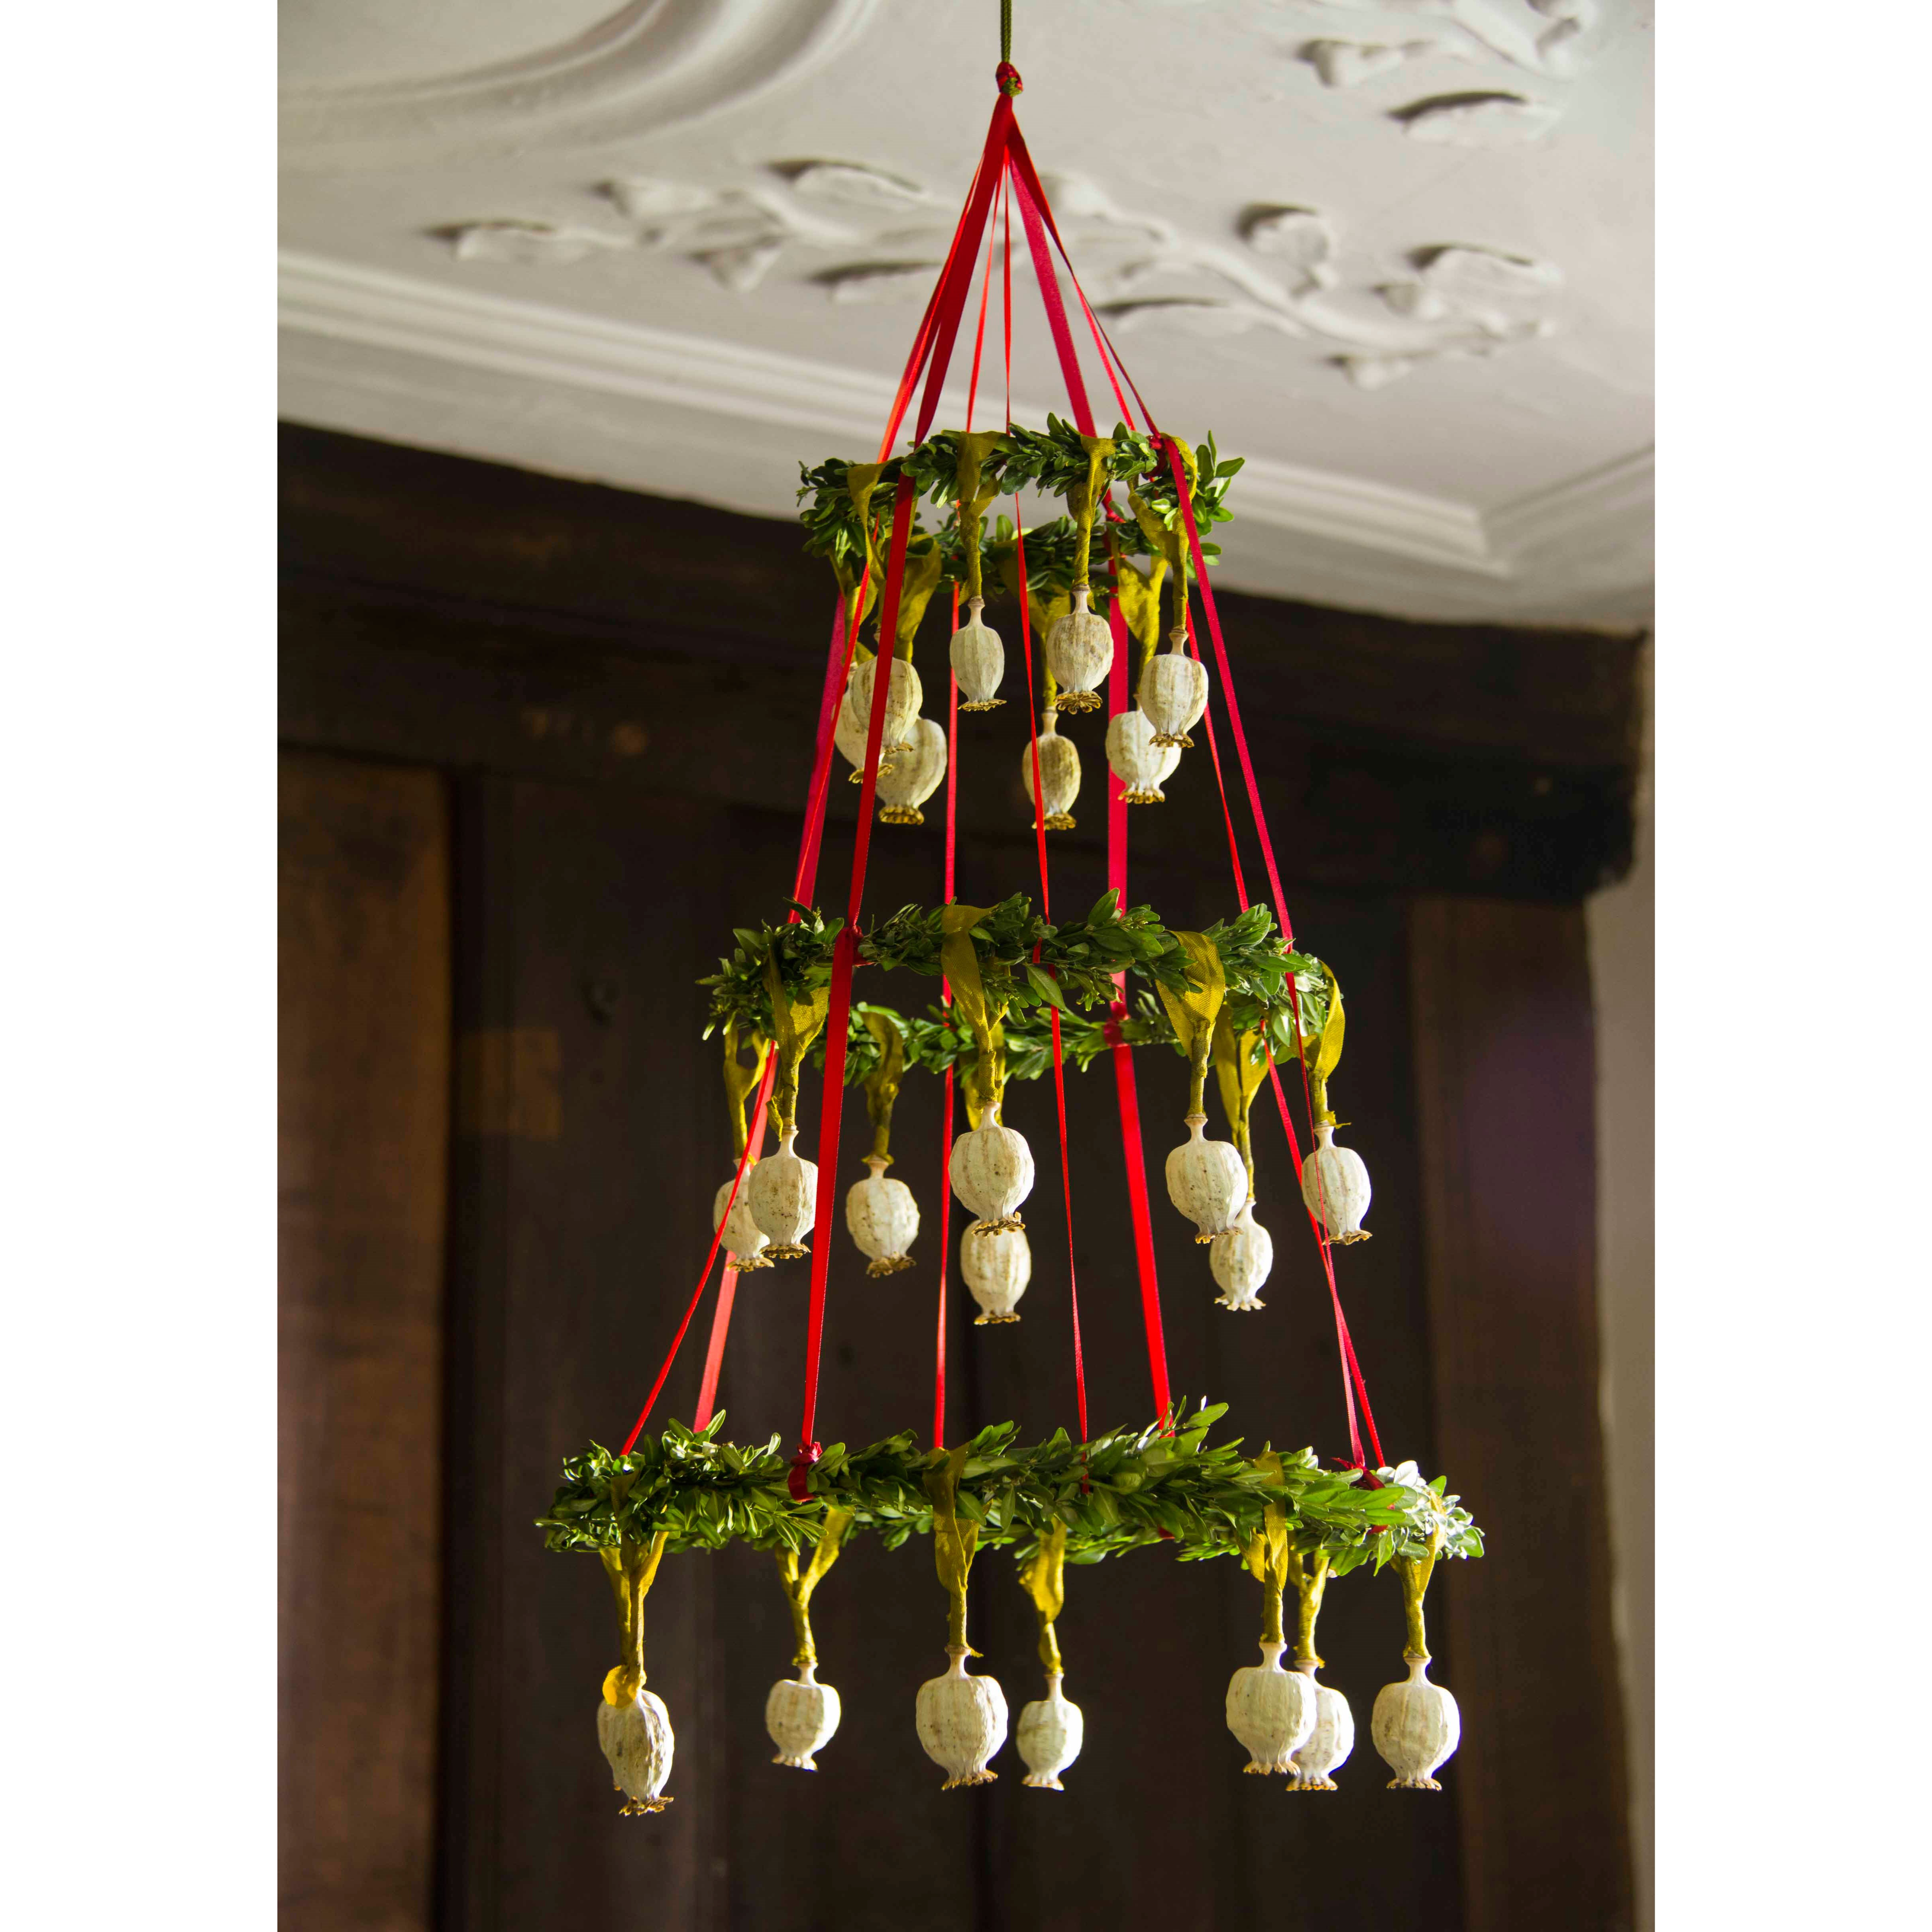 Buxus & poppy seed hanging wreath